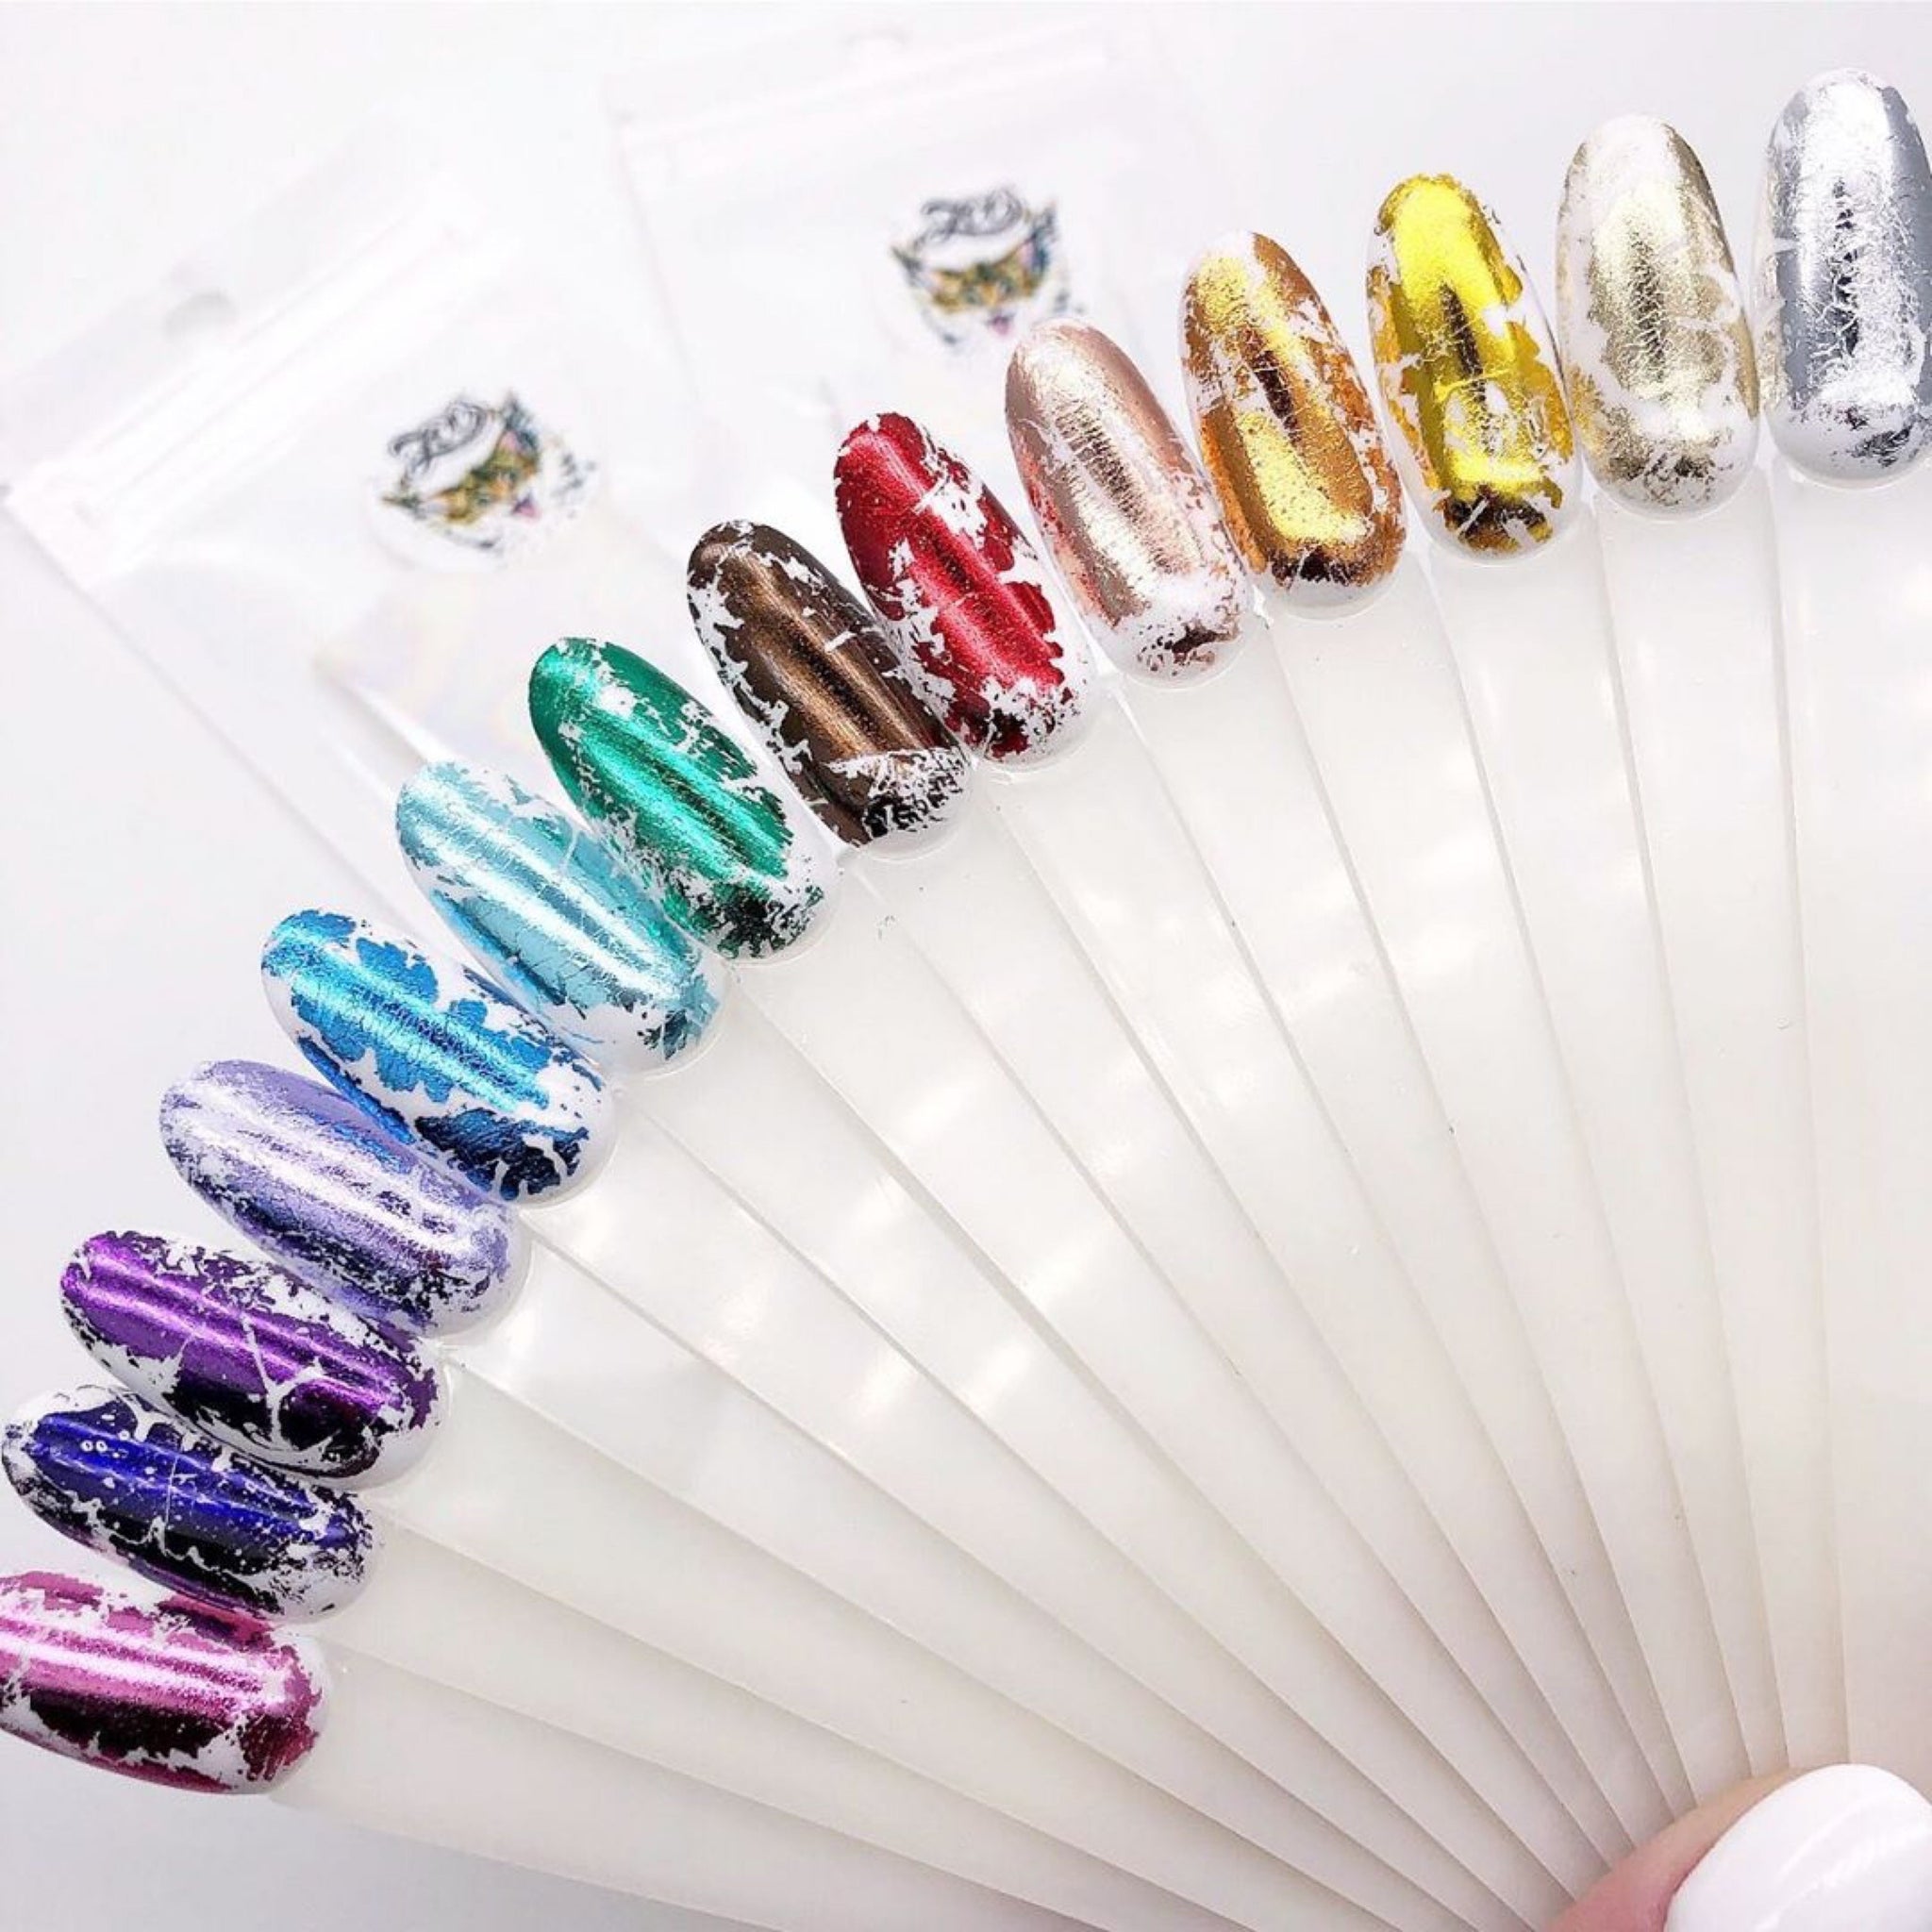 Designer nail transfer foil – Exotic Nails Store